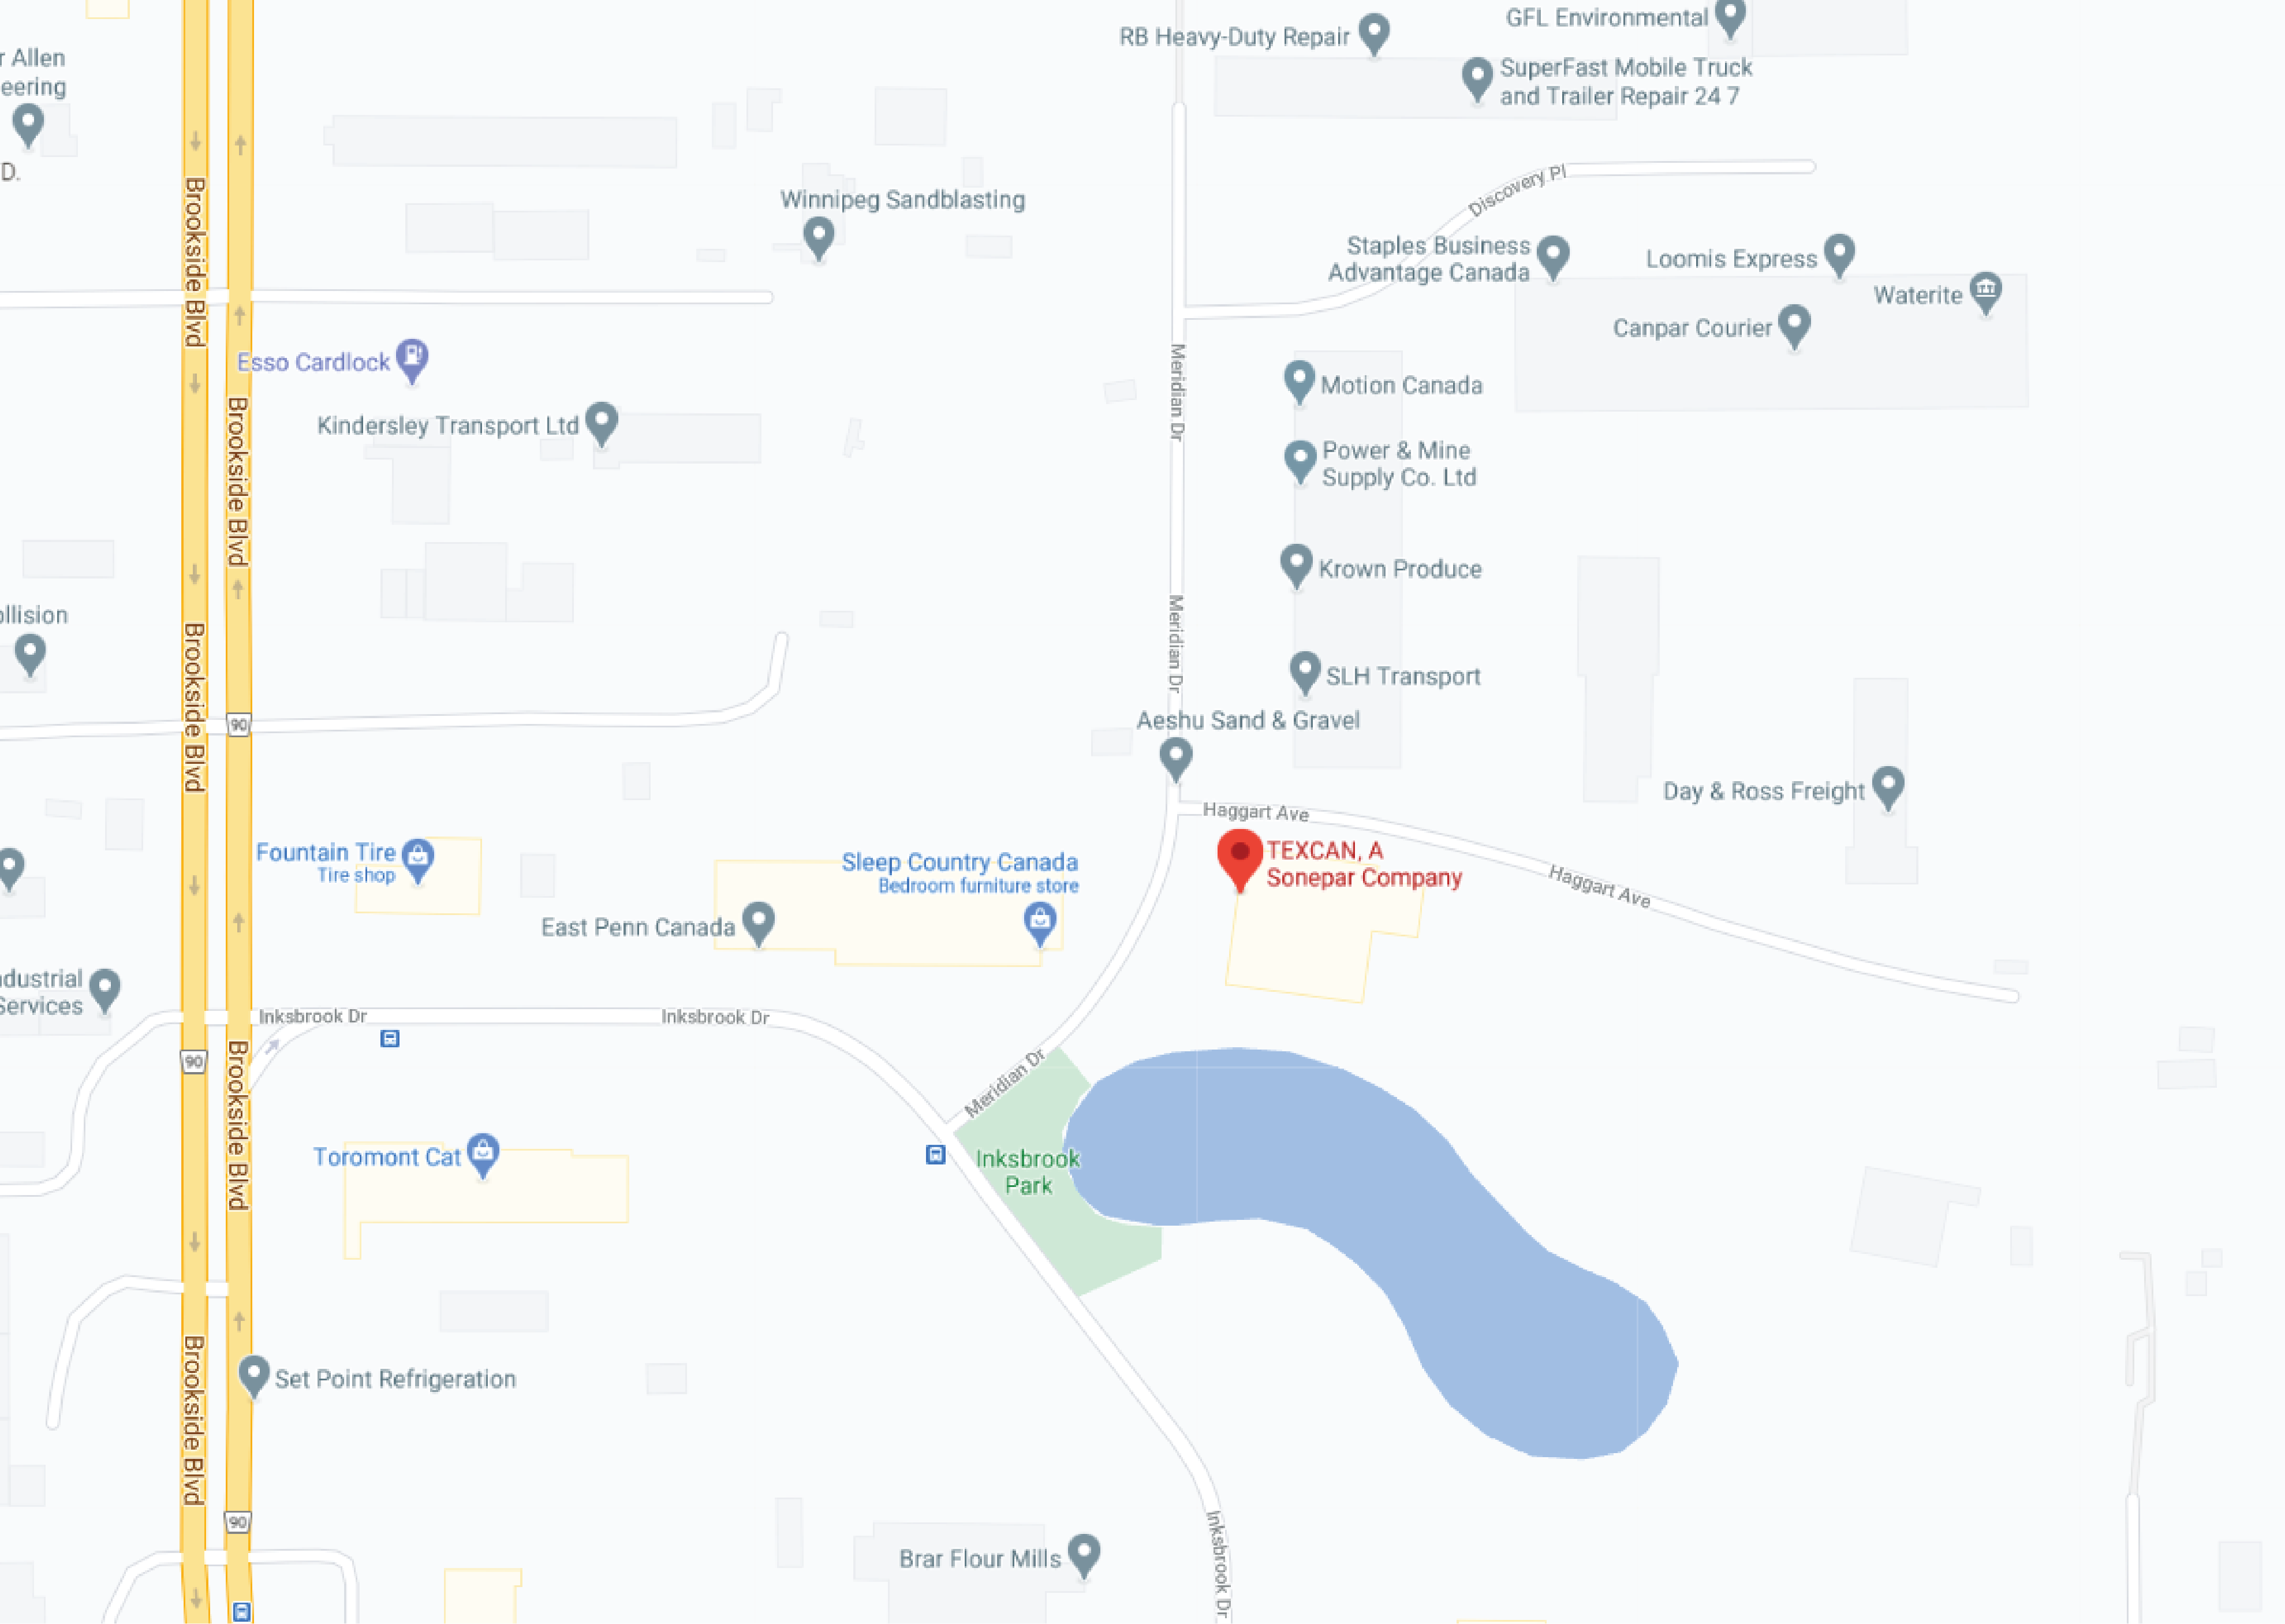 Contact Us - Google Map Screenshots - Winnipeg.png